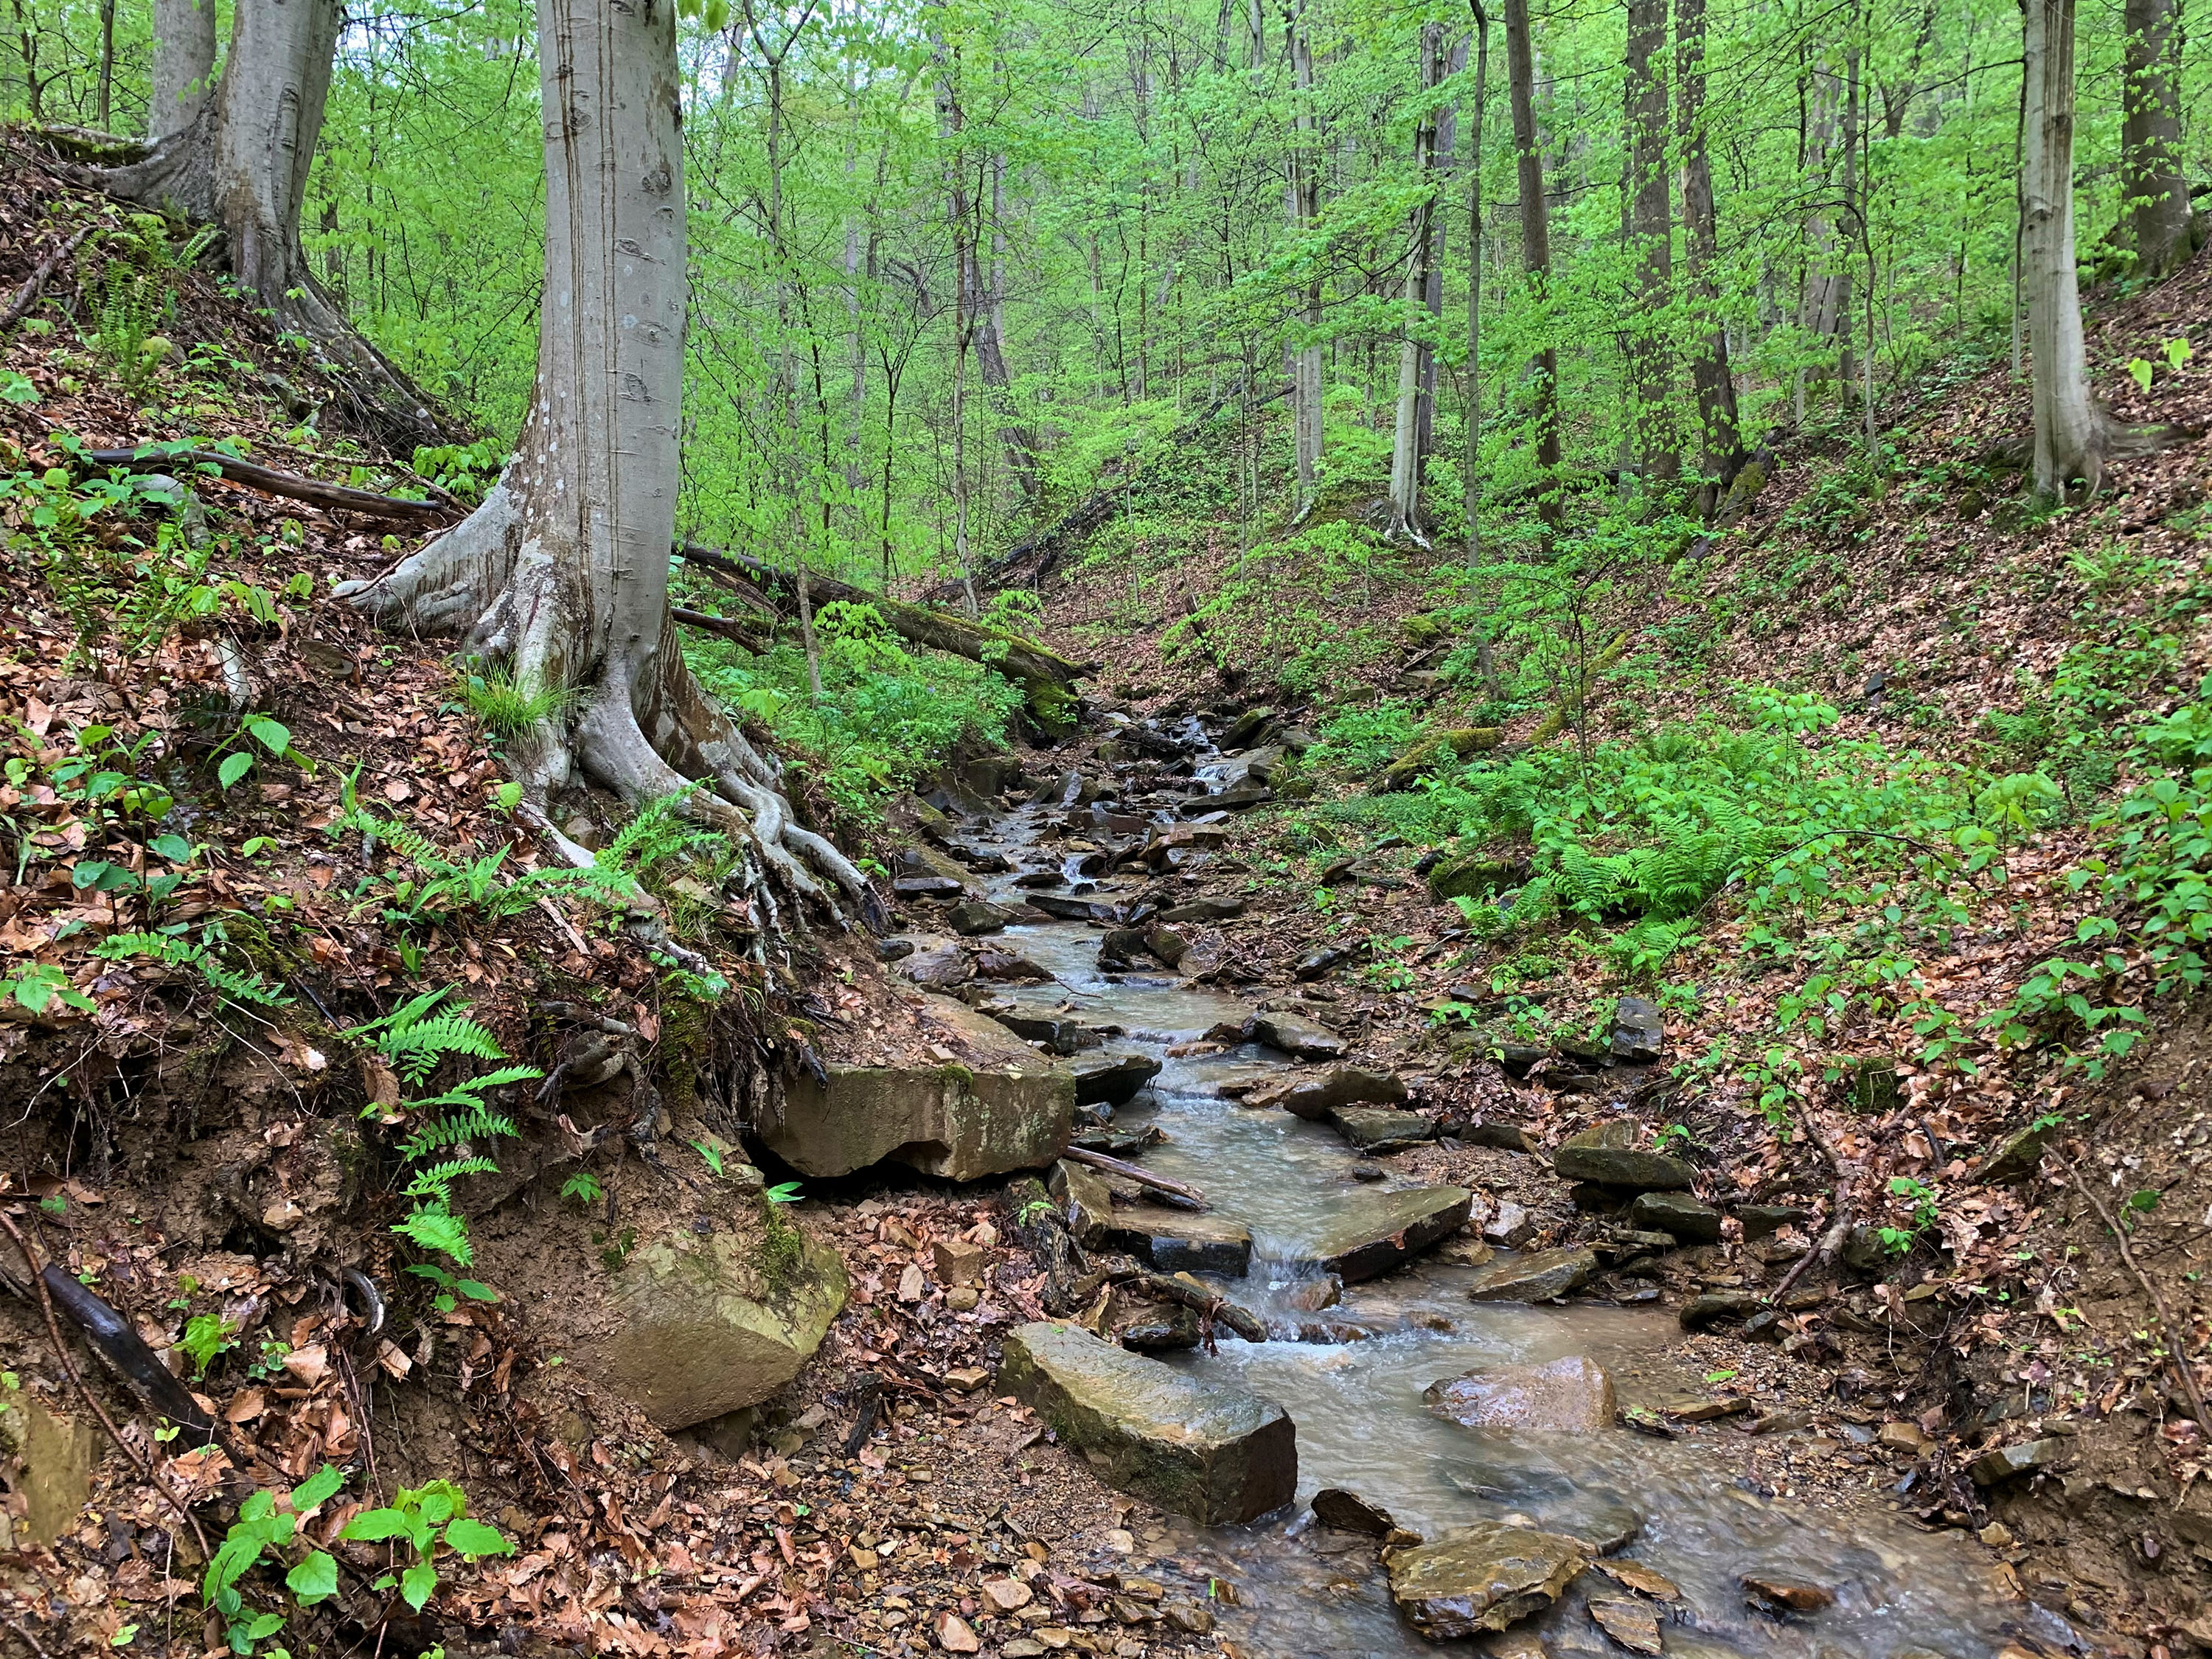 Stream flows through lush green forest at Edge of Appalachia Preserve.